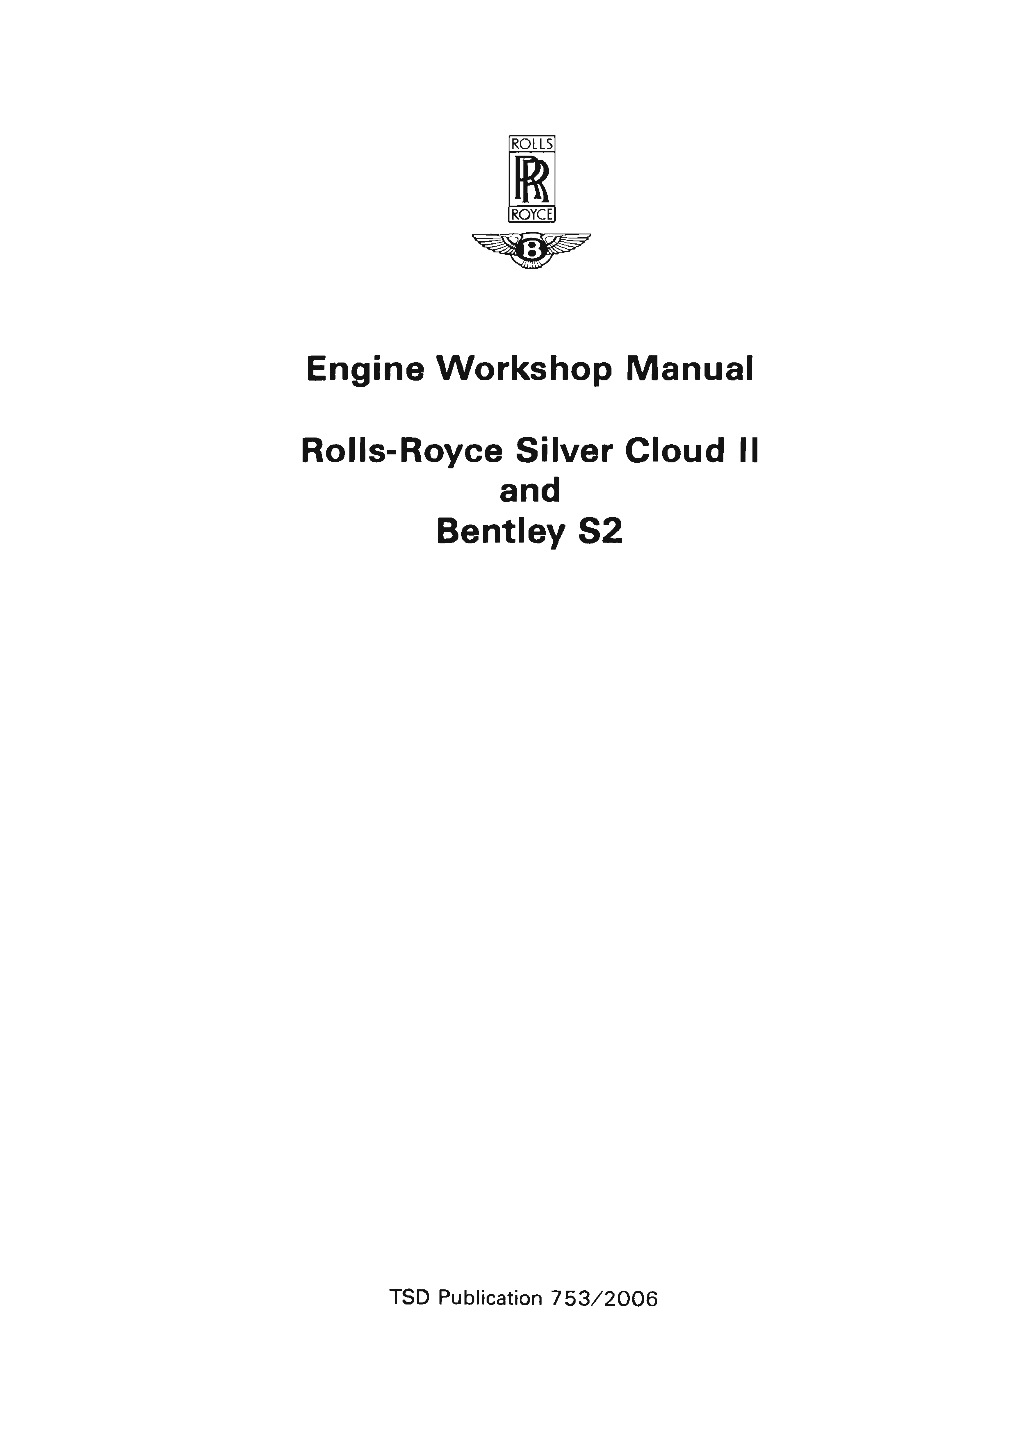 Engine Workshop Manual Rolls-Royce Silver Cloud II And